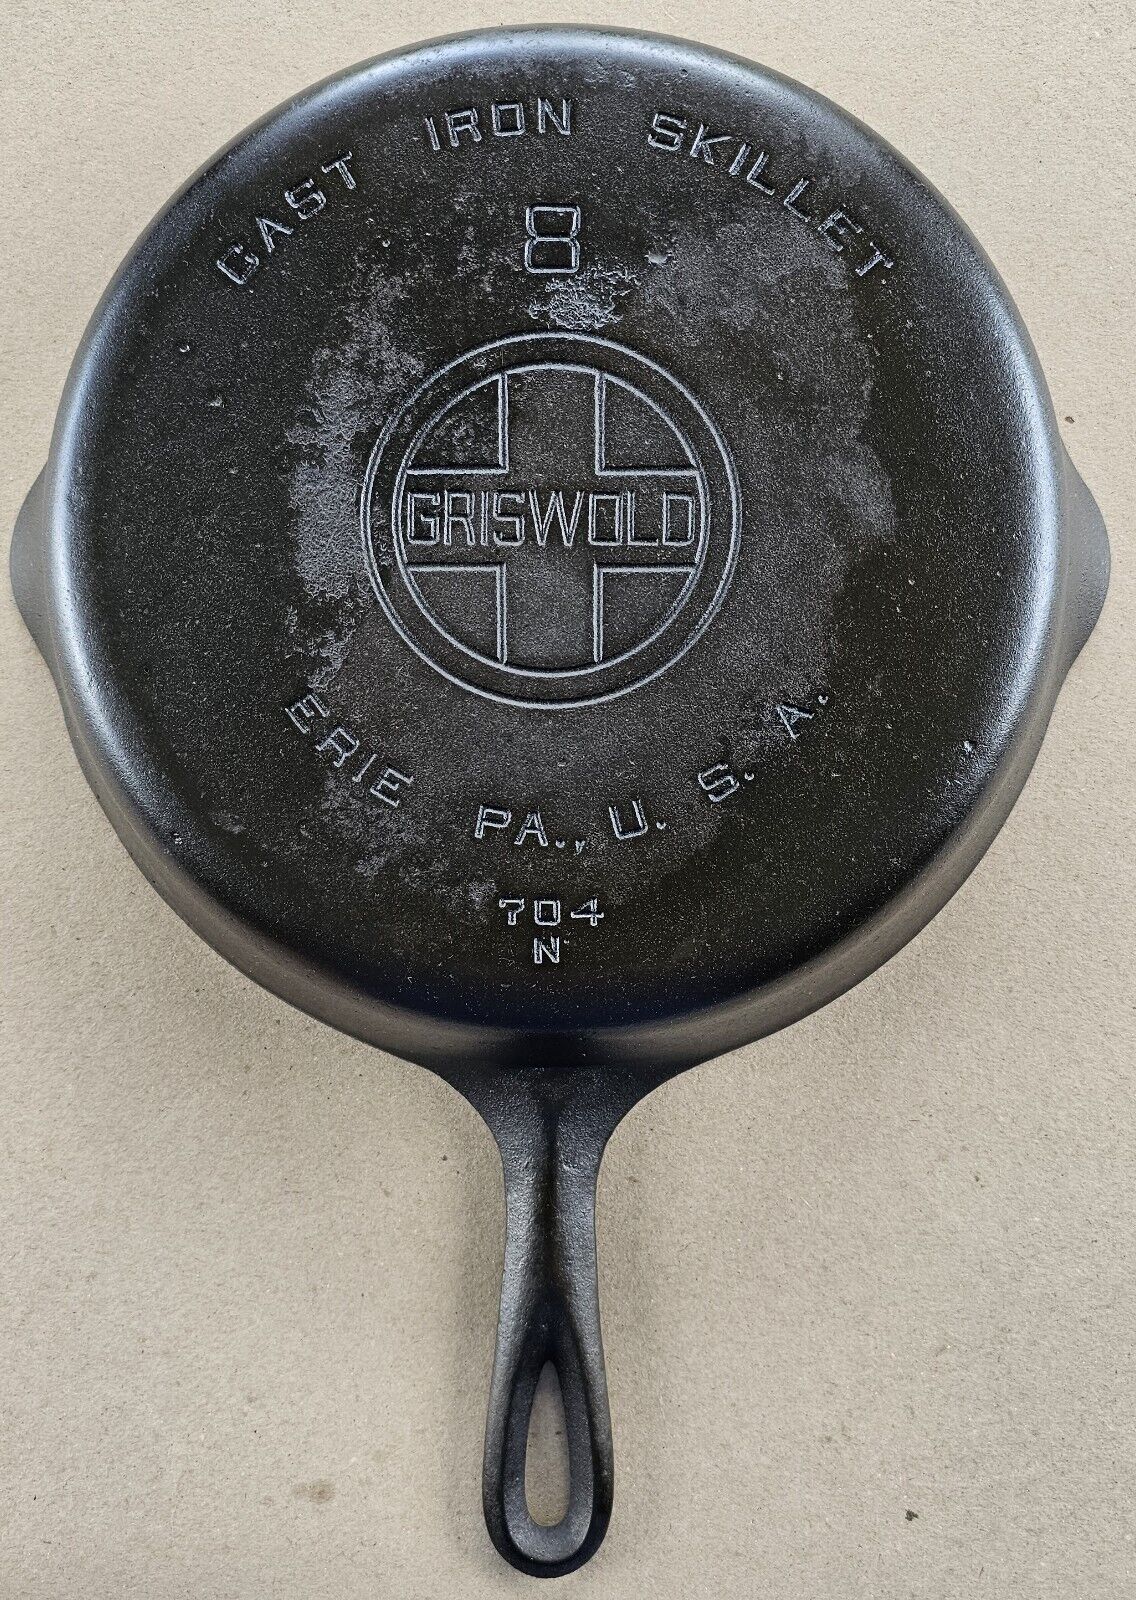 Griswold #8 Erie PA Cast Iron Skillet #704 N Large Block Logo EPU Clean